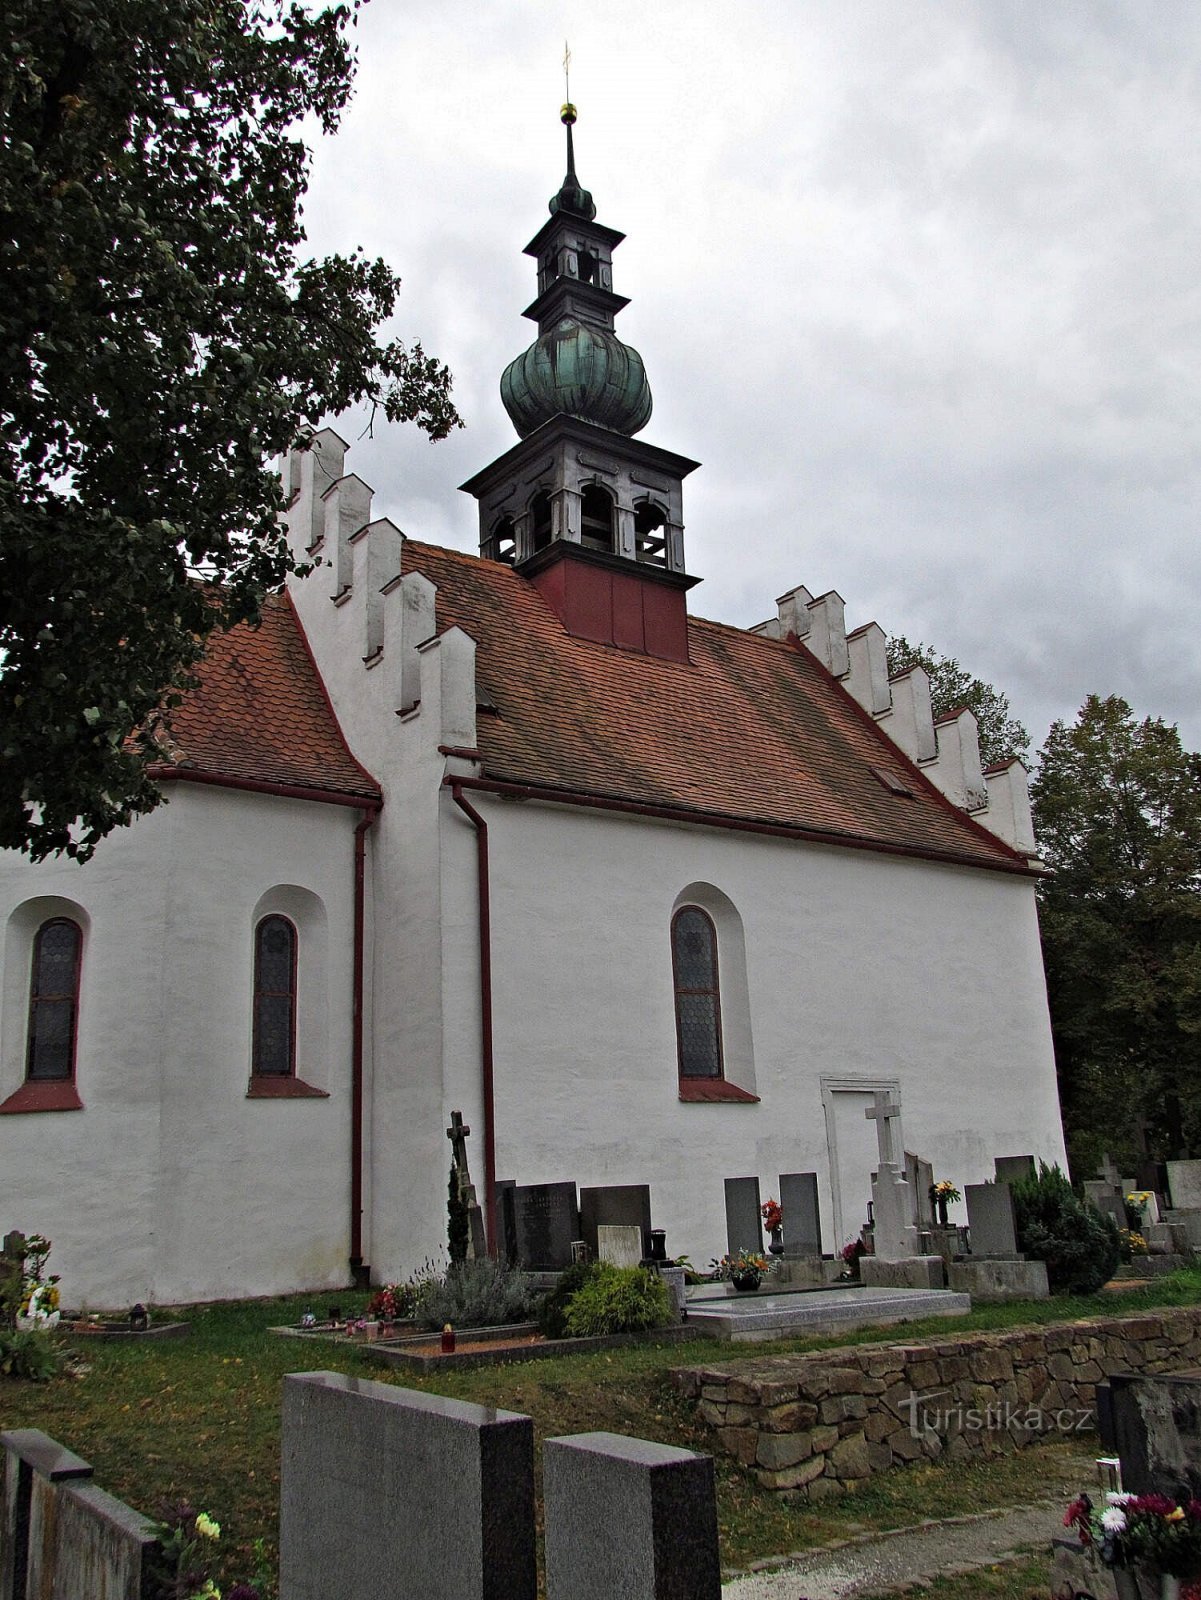 Preclaustro - iglesia cementerio de la Santísima Trinidad